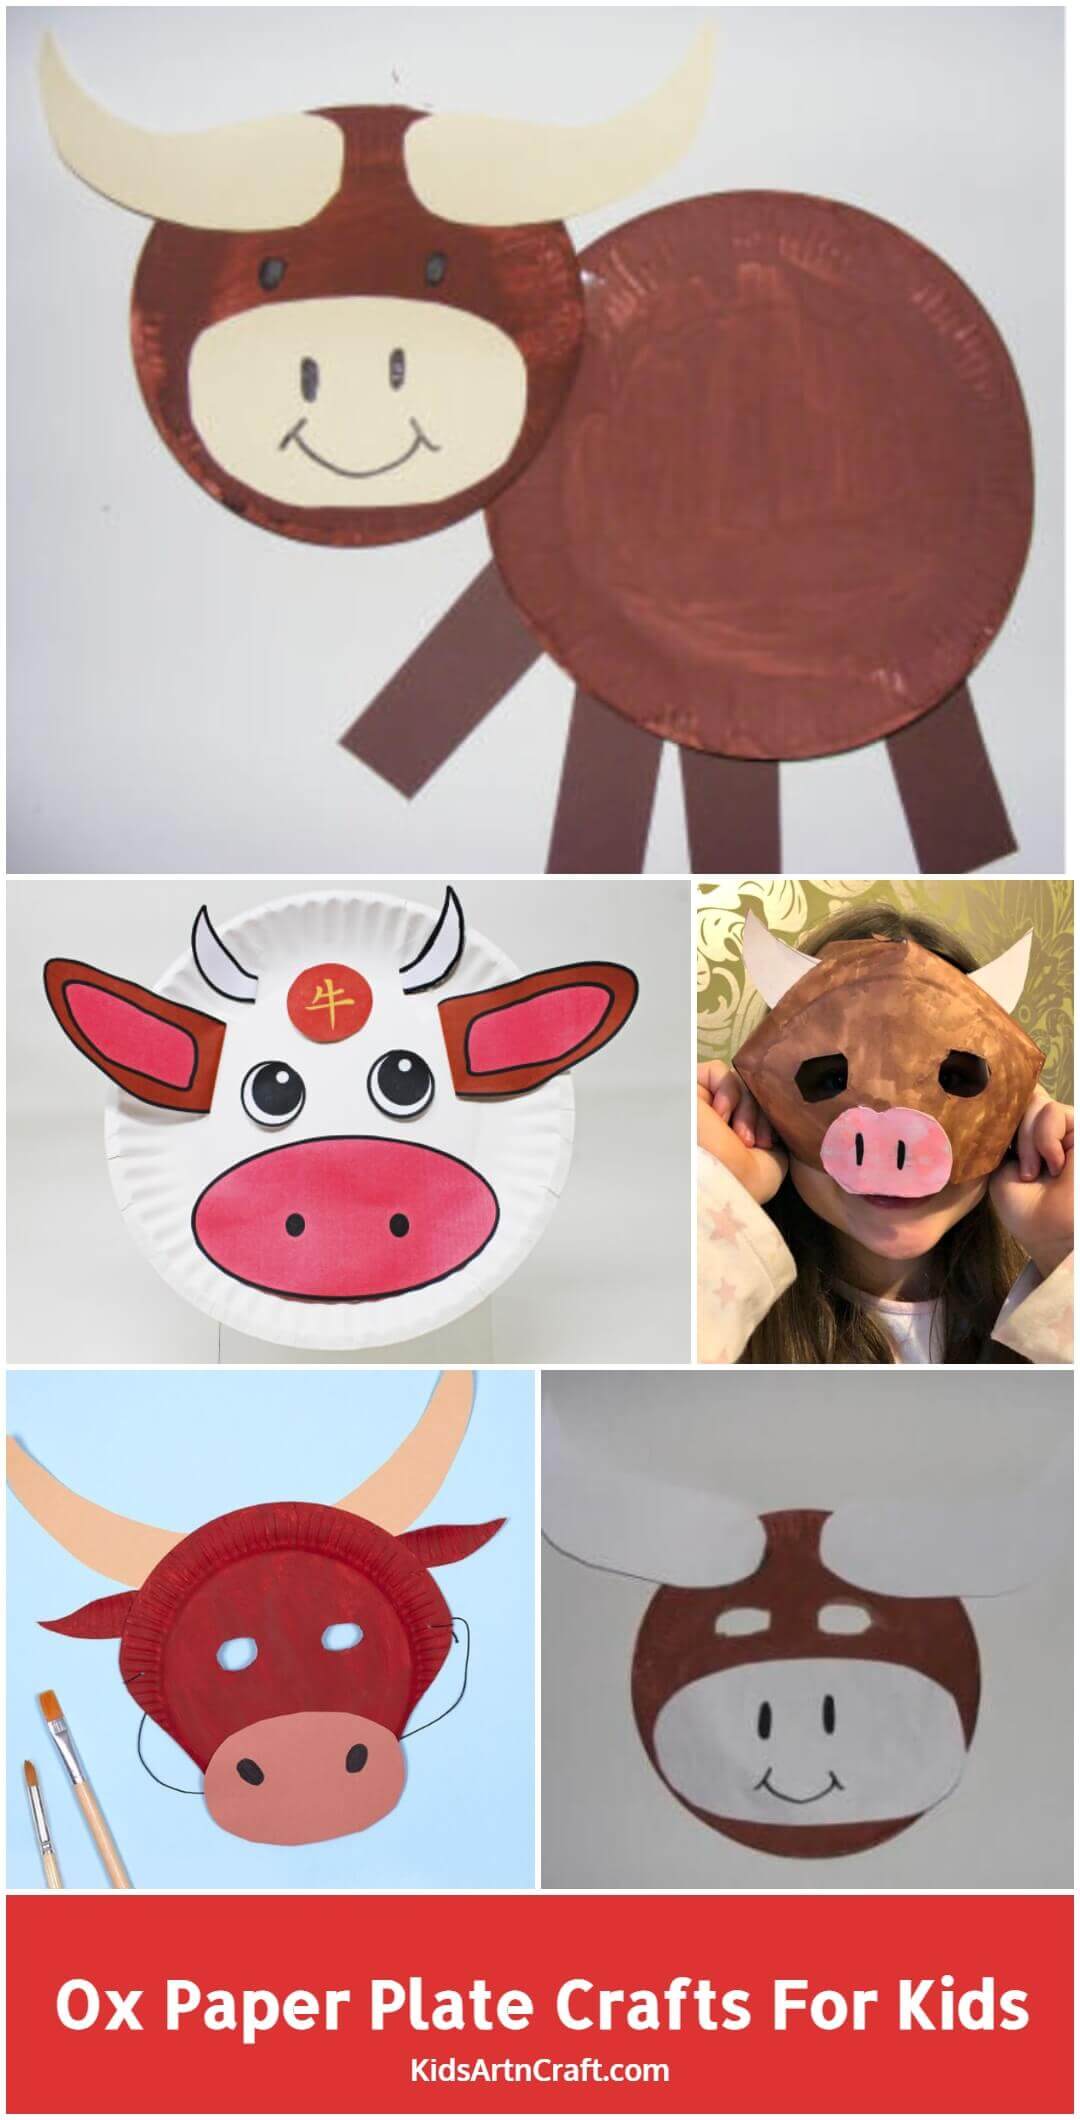 Ox Paper Plate Crafts for Kids - Kids Art & Craft